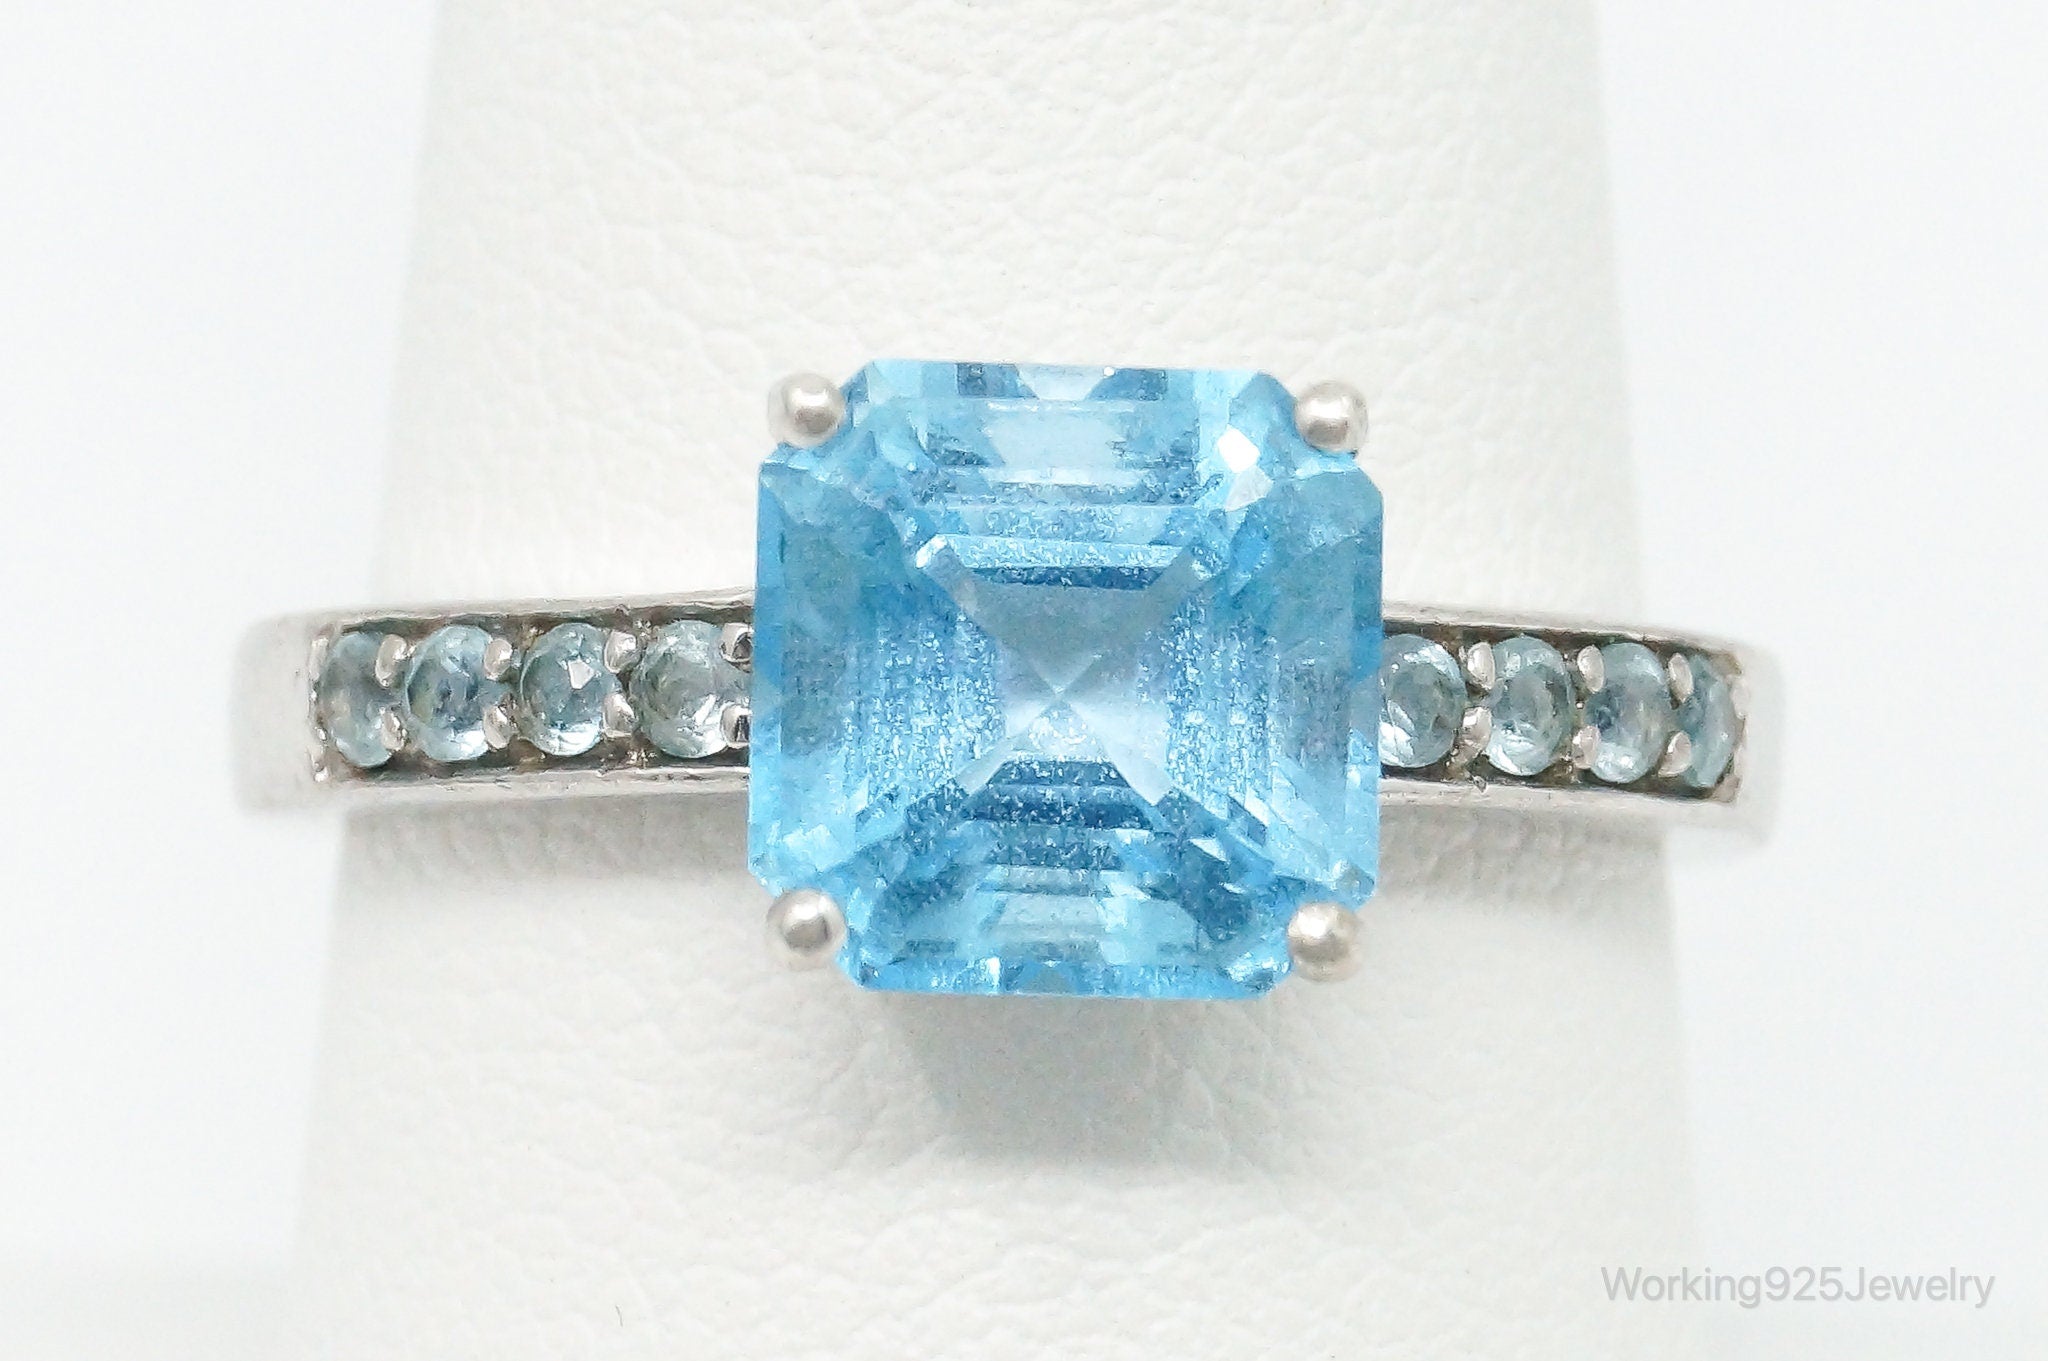 Blue Topaz Aquamarine Sterling Silver Ring - Size 8.25 Adjustable